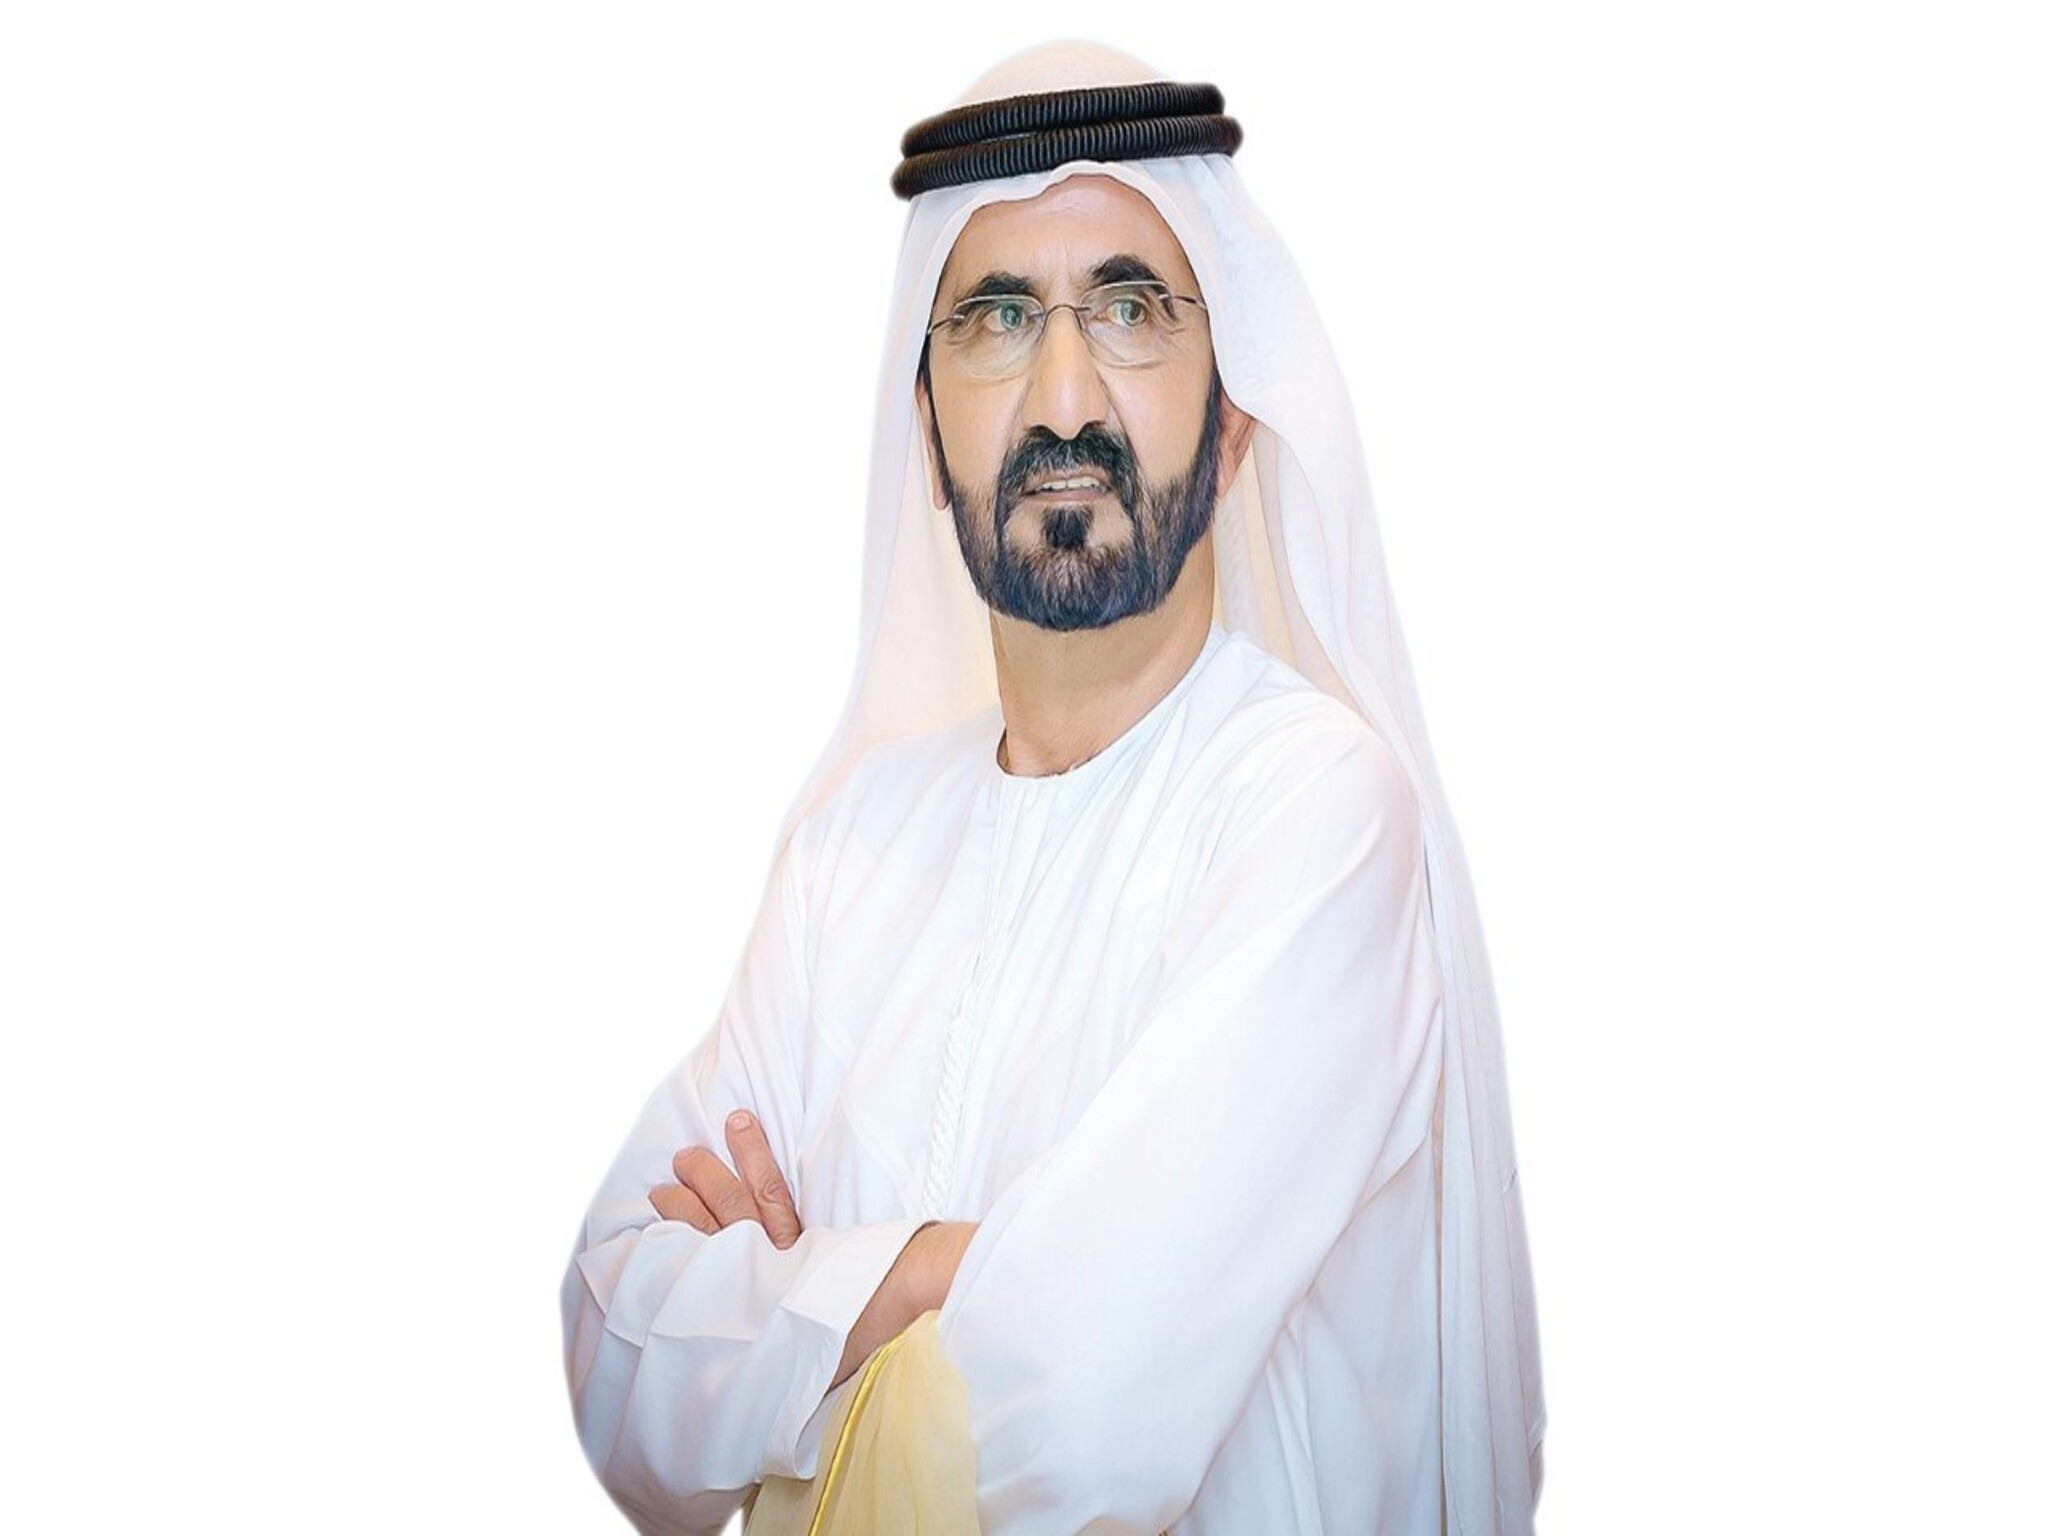 UAE issues adecision regarding the Eid al-Fitr holiday